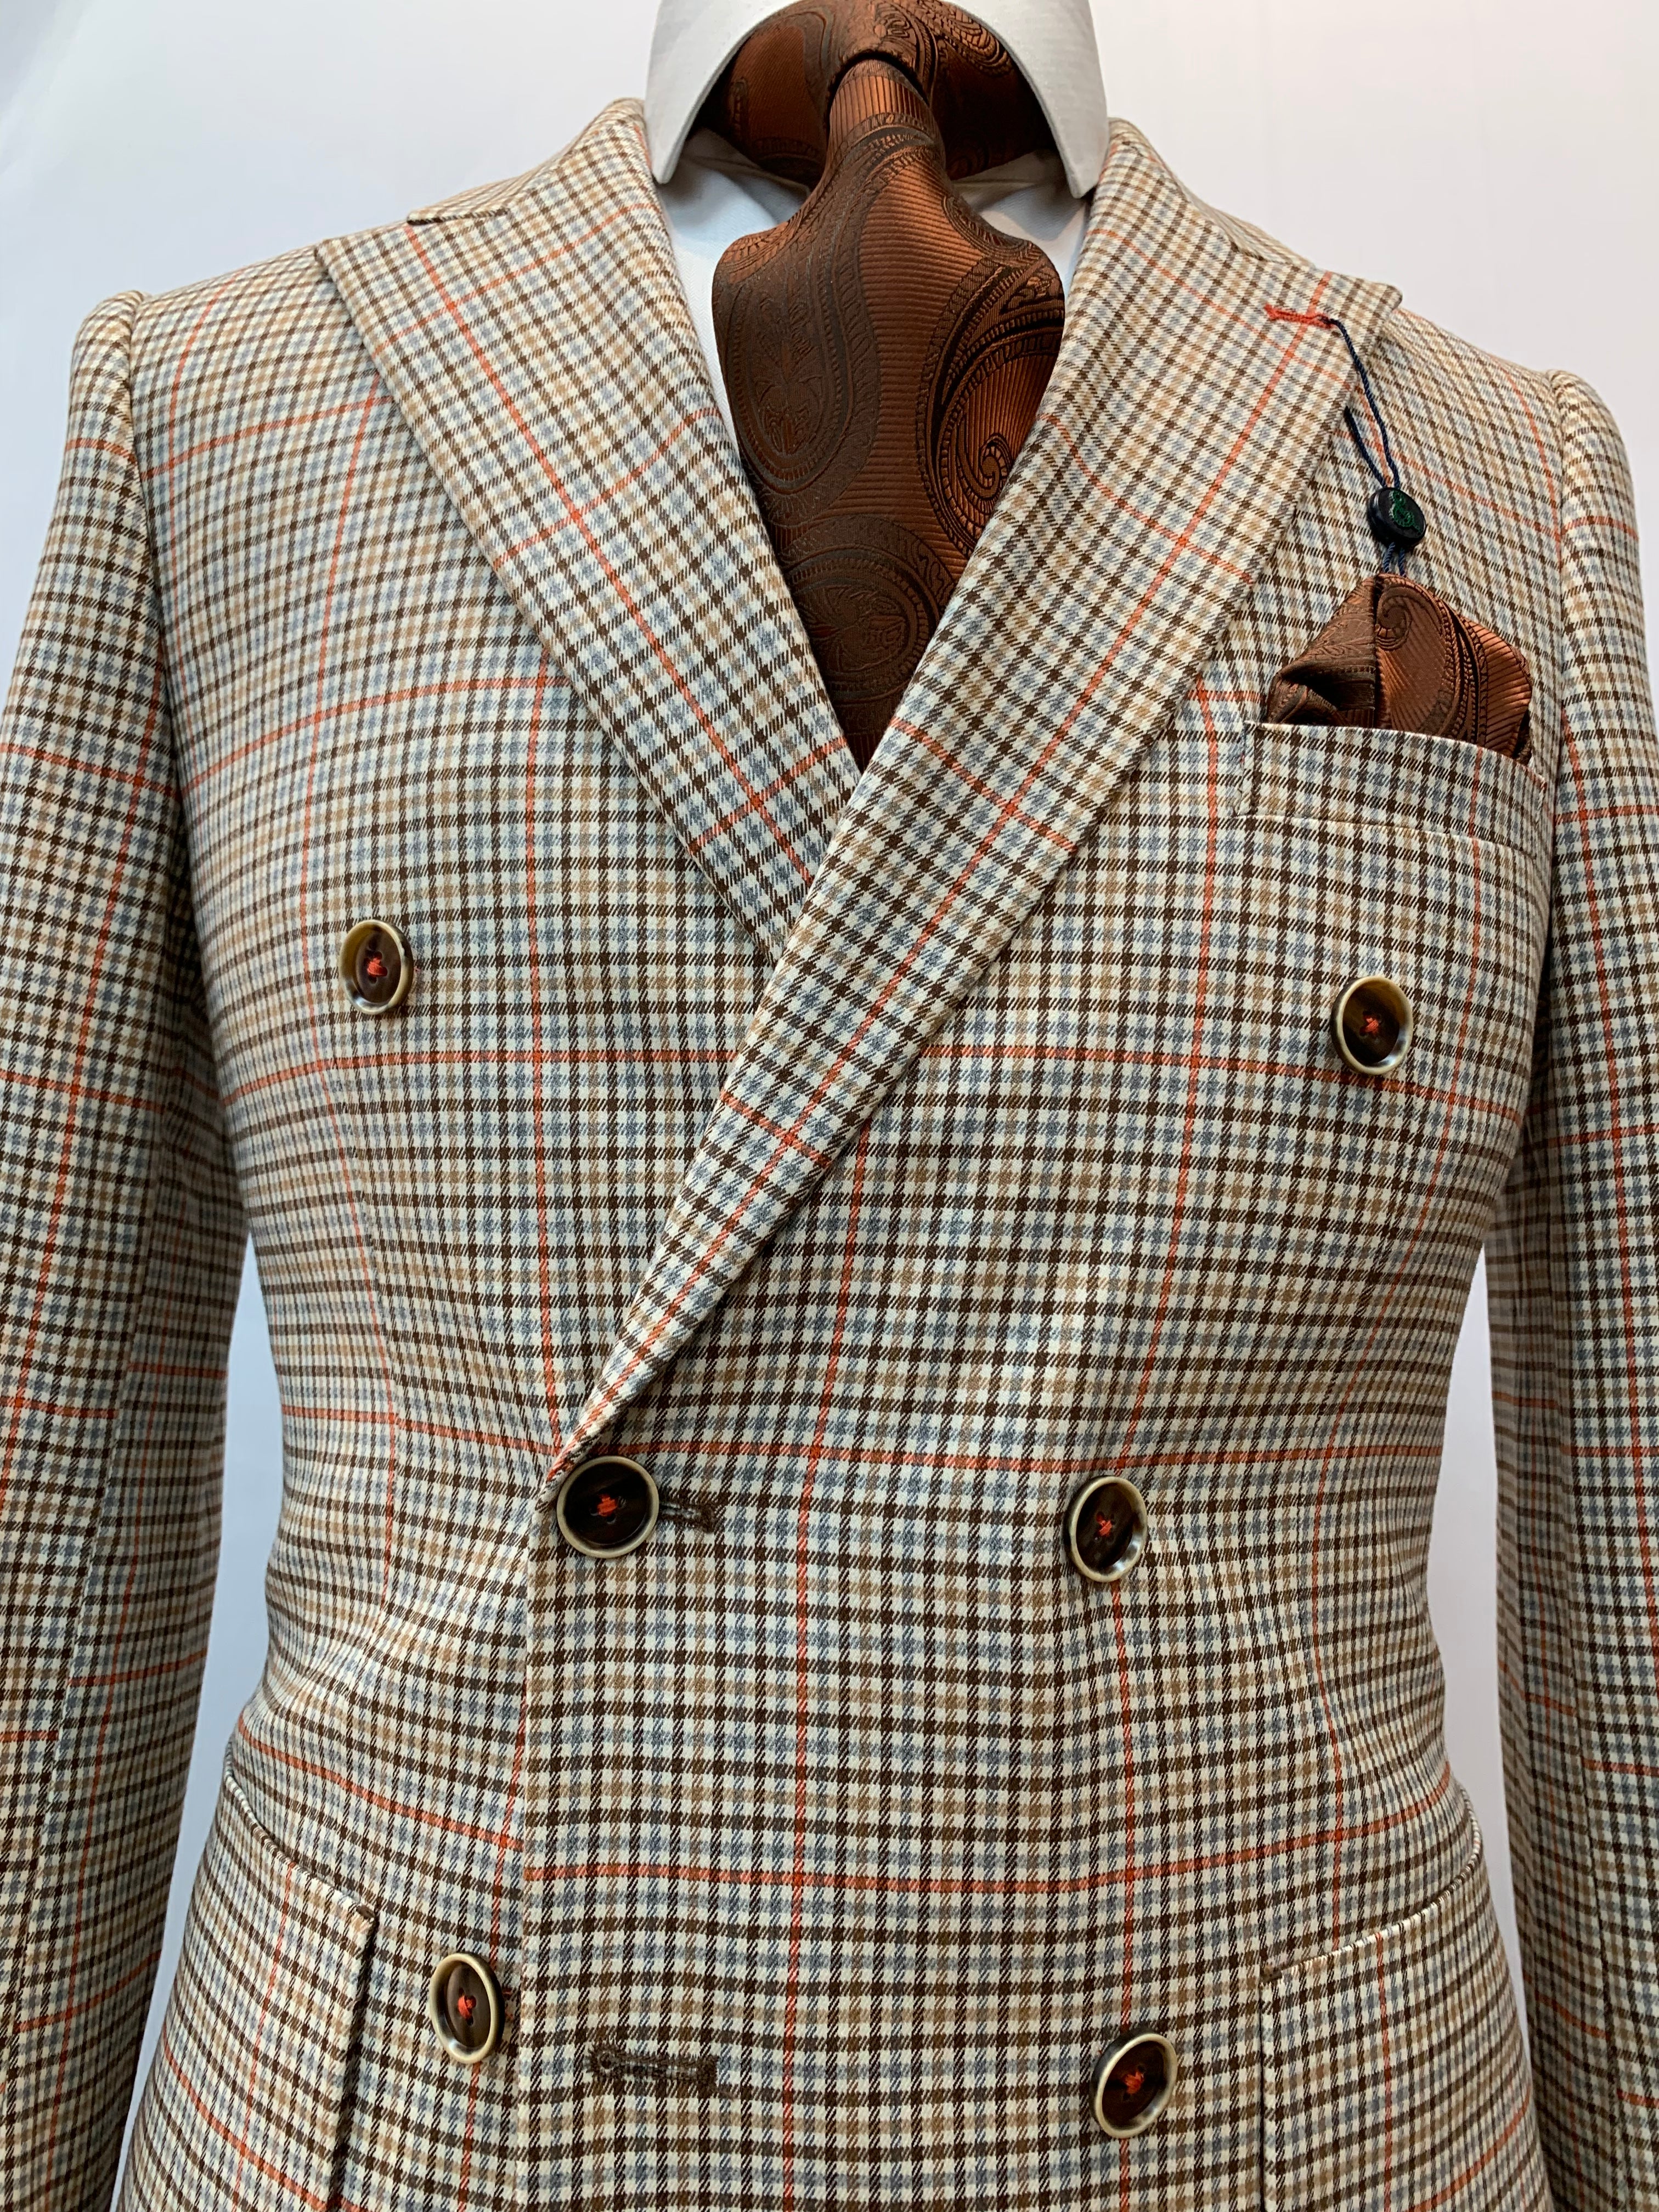 Paisley & Gray Slim Fit Brown Plaid Suit